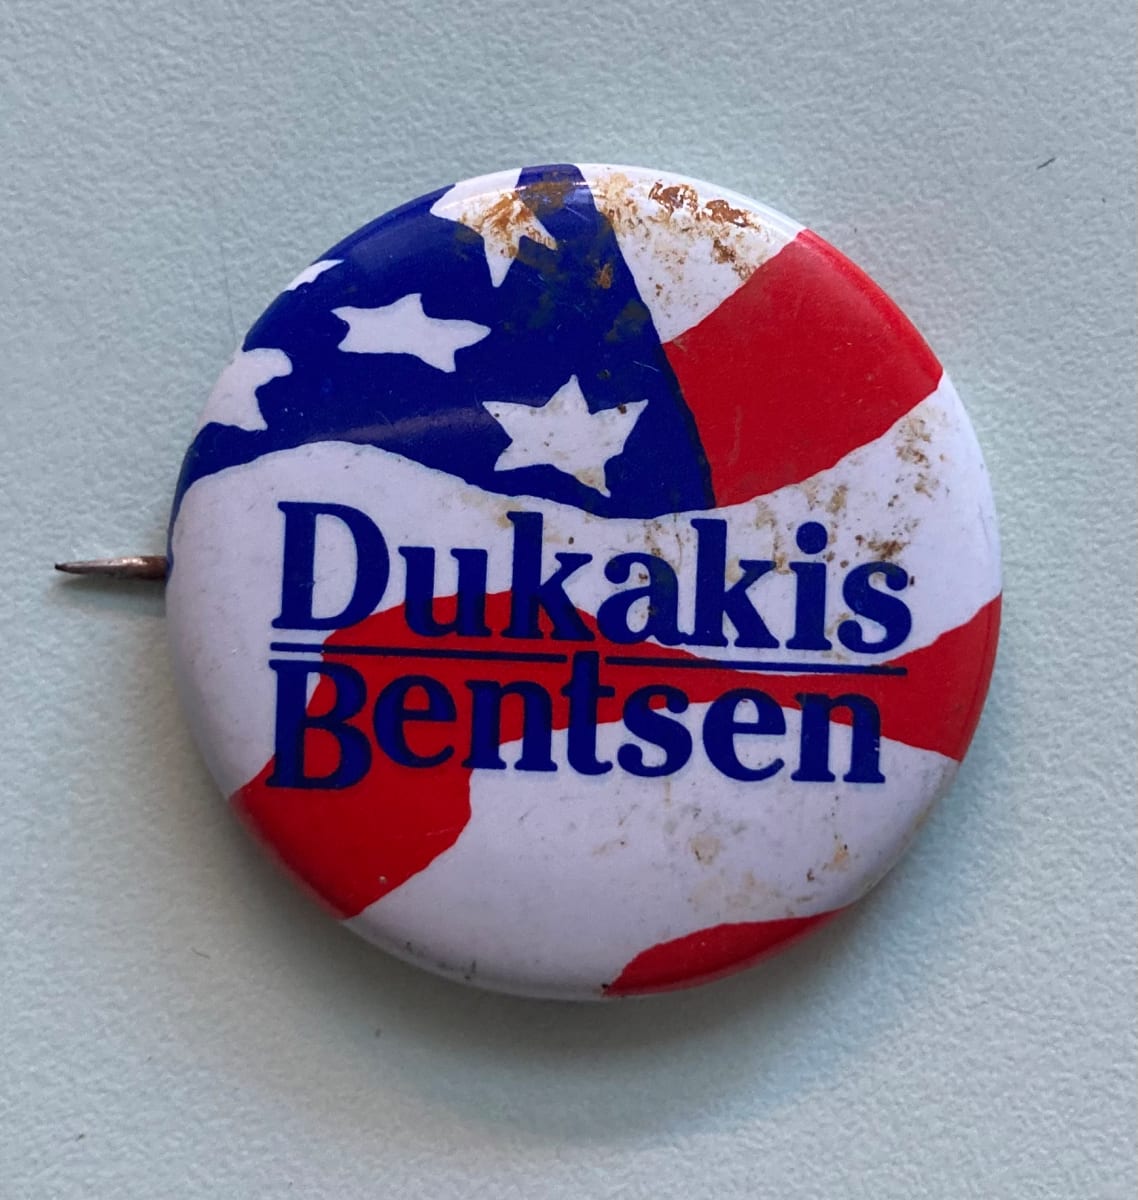 Michael Dukakis Lloyd Bentsen campaign button by political campaign 